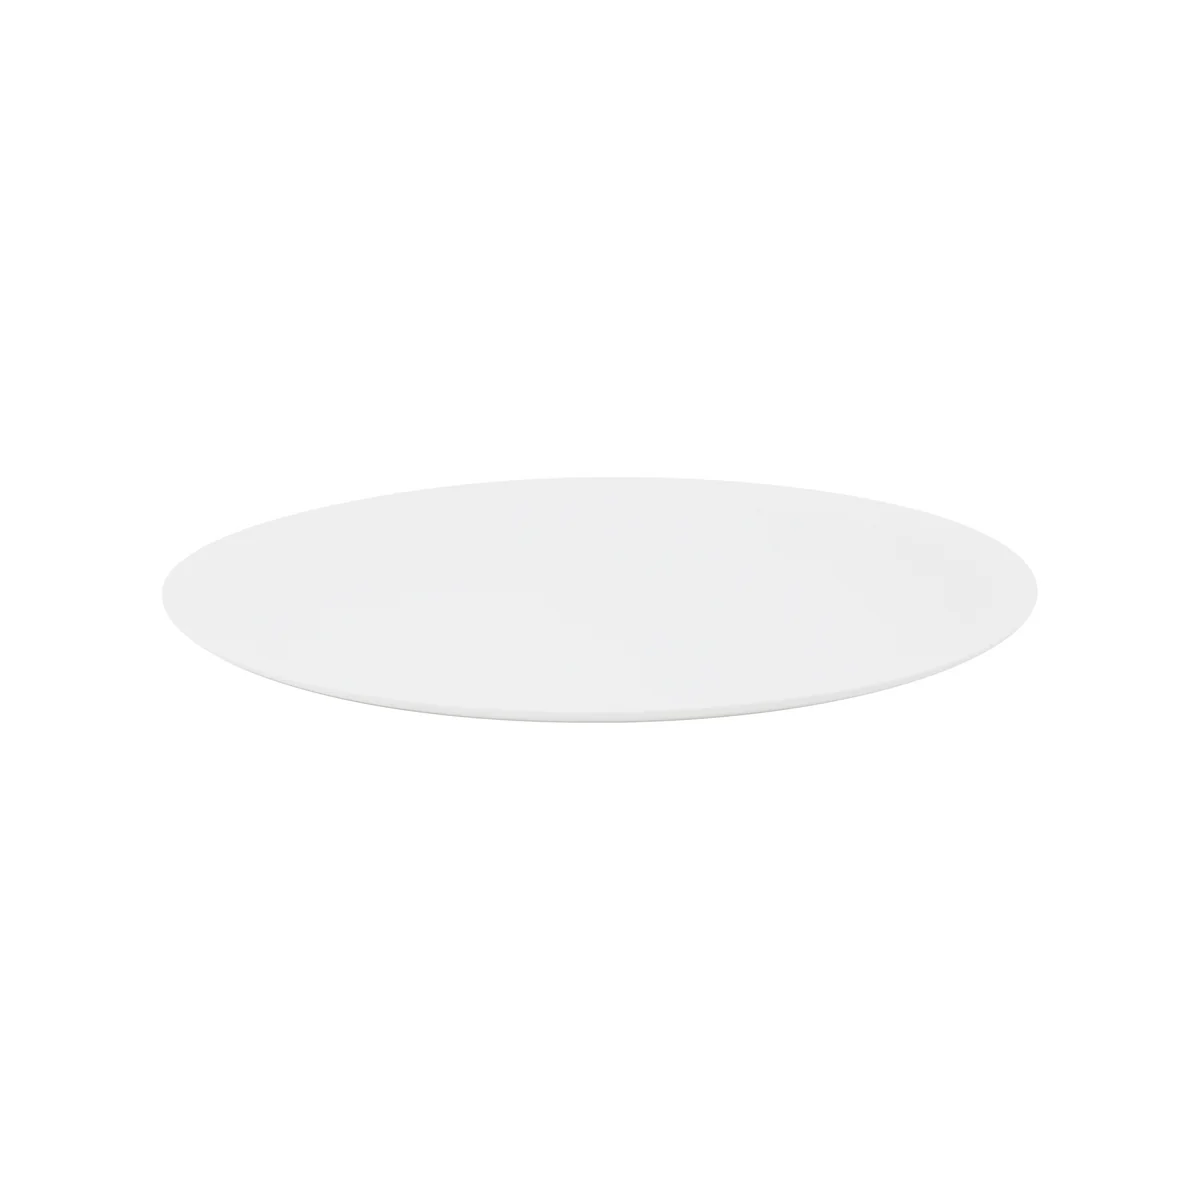 SLIM satin white - 29 cm plate